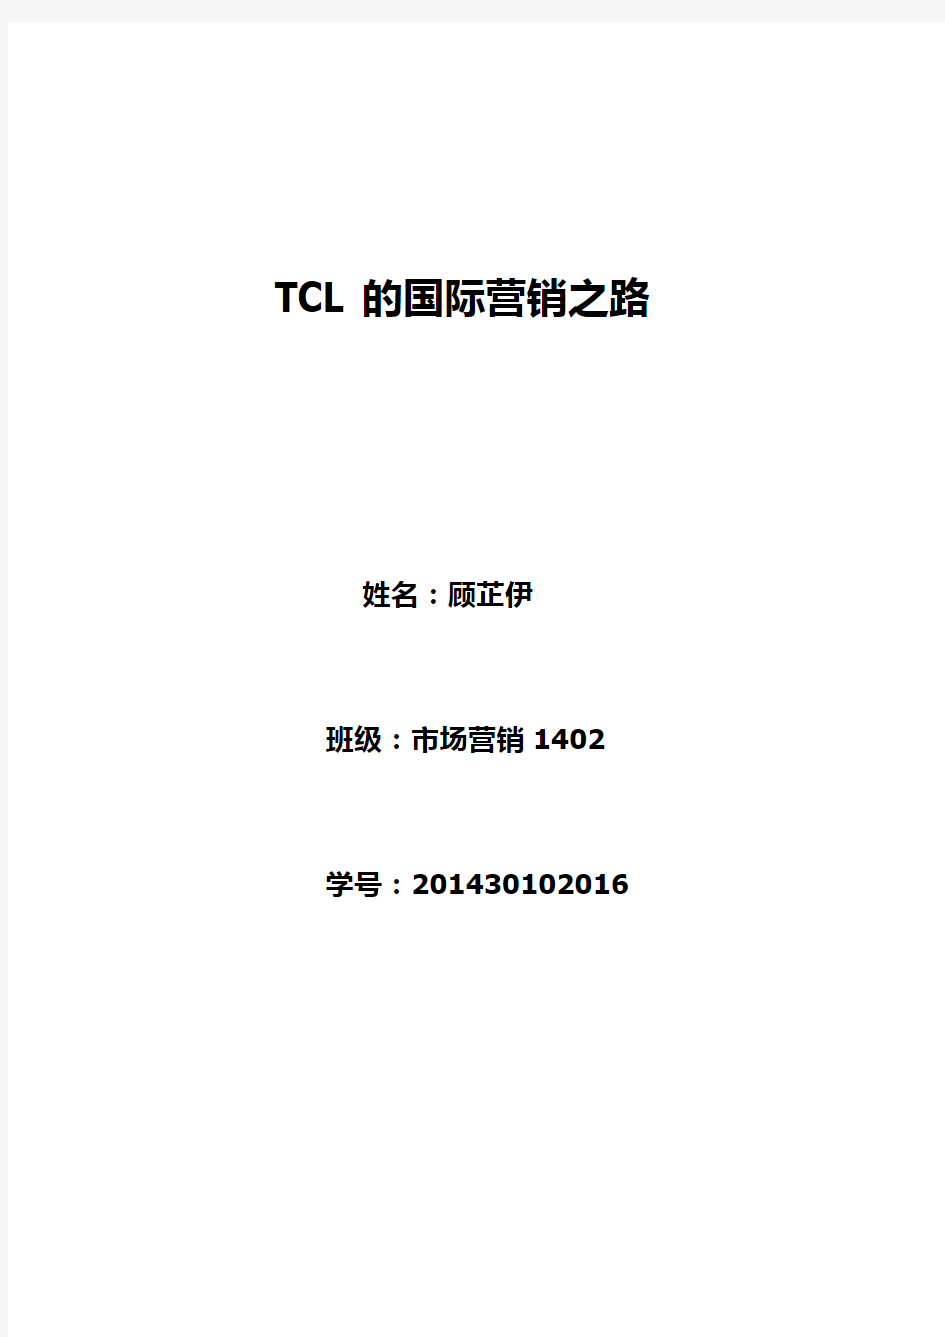 TCL的国际营销